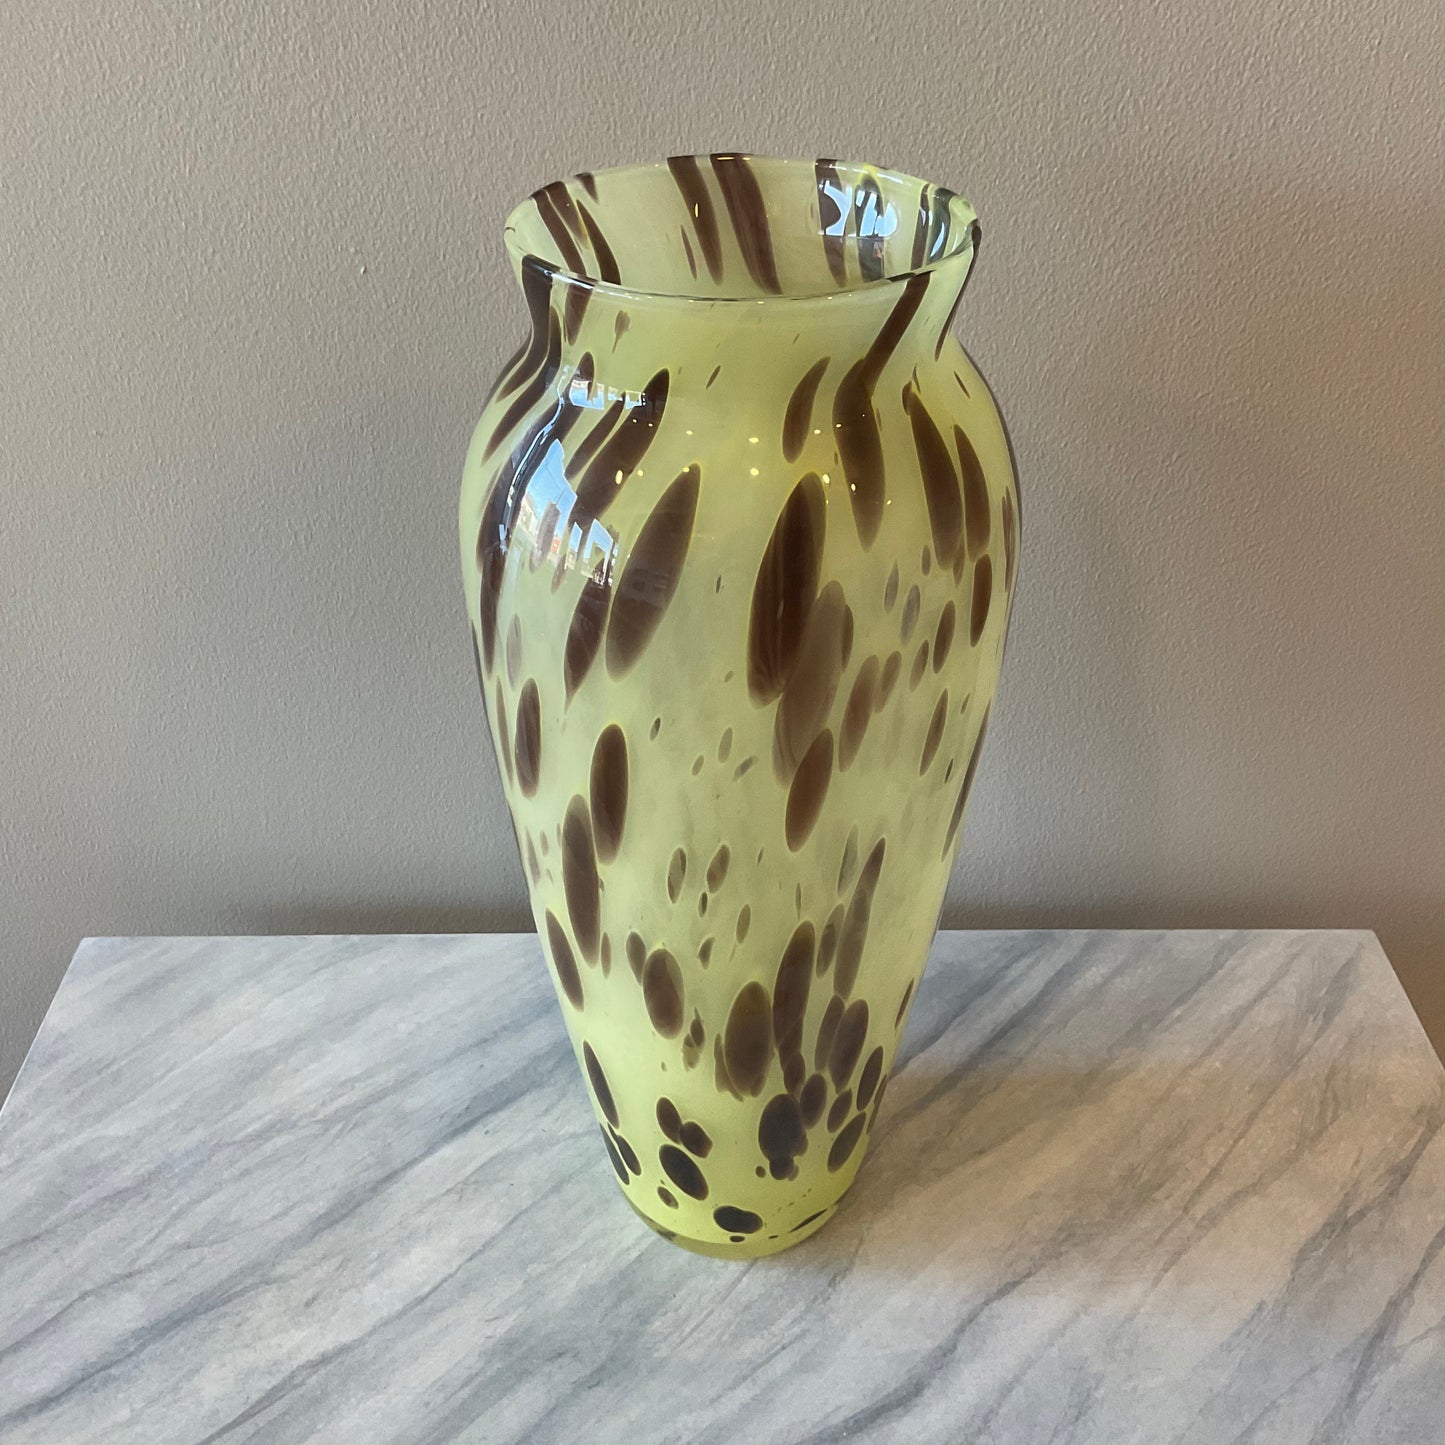 Italian Art Glass Vase (yellow and brown)